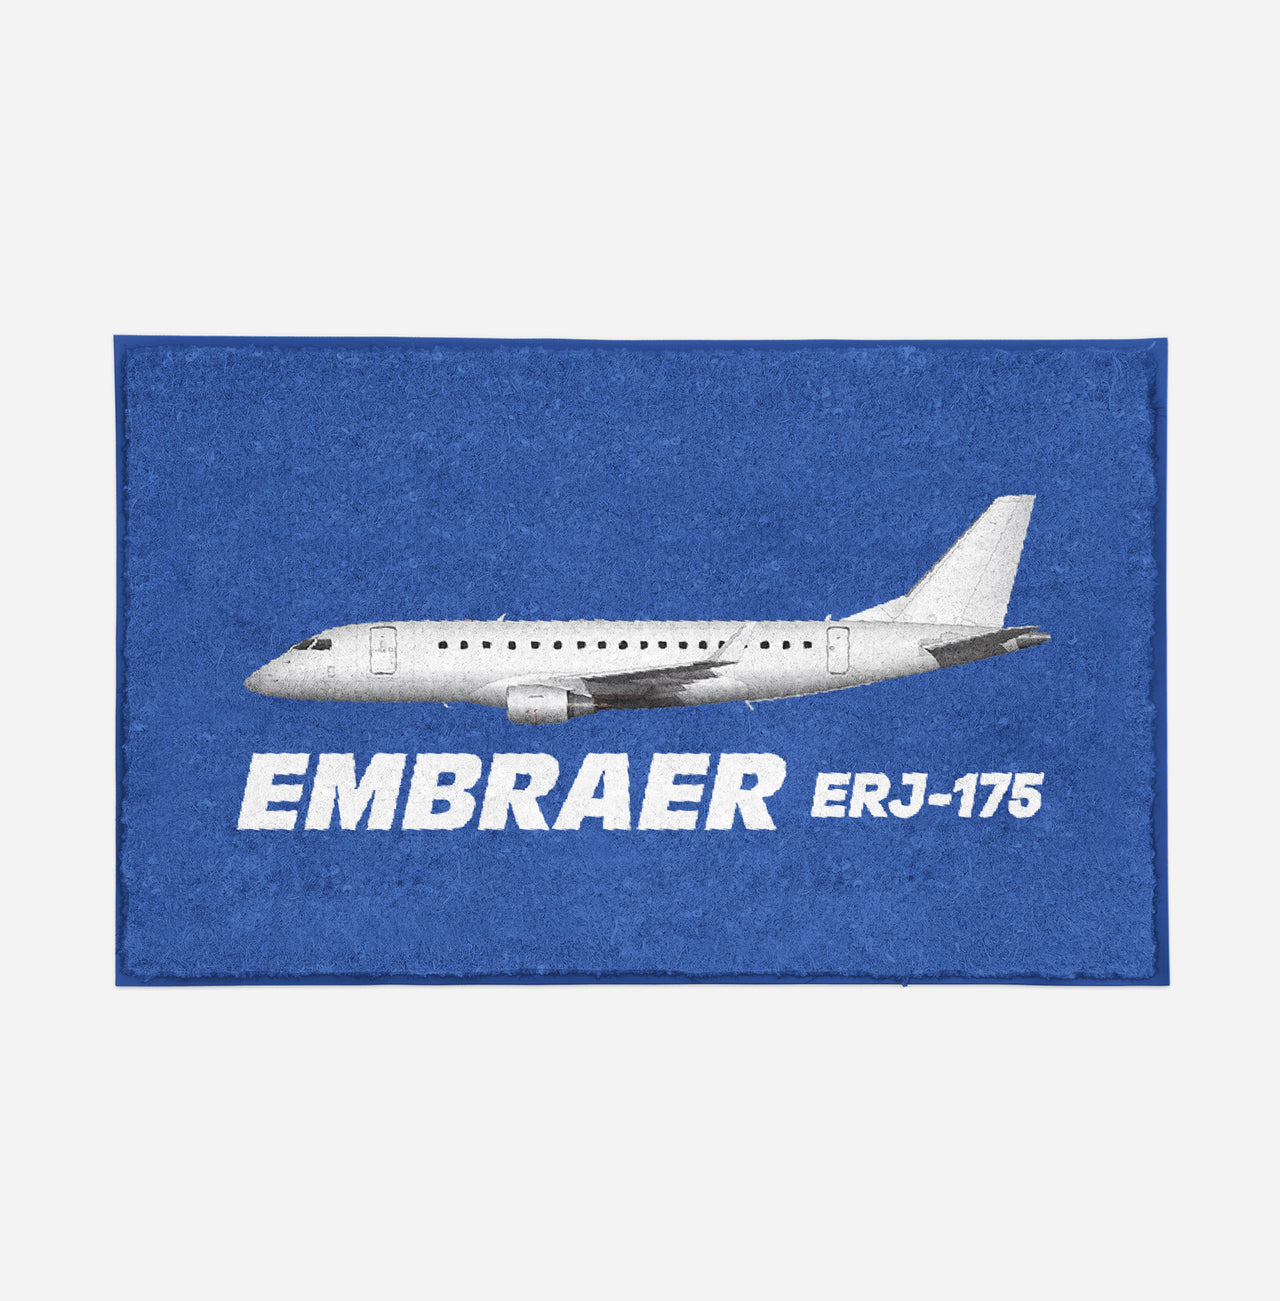 The Embraer ERJ-175 Designed Door Mats